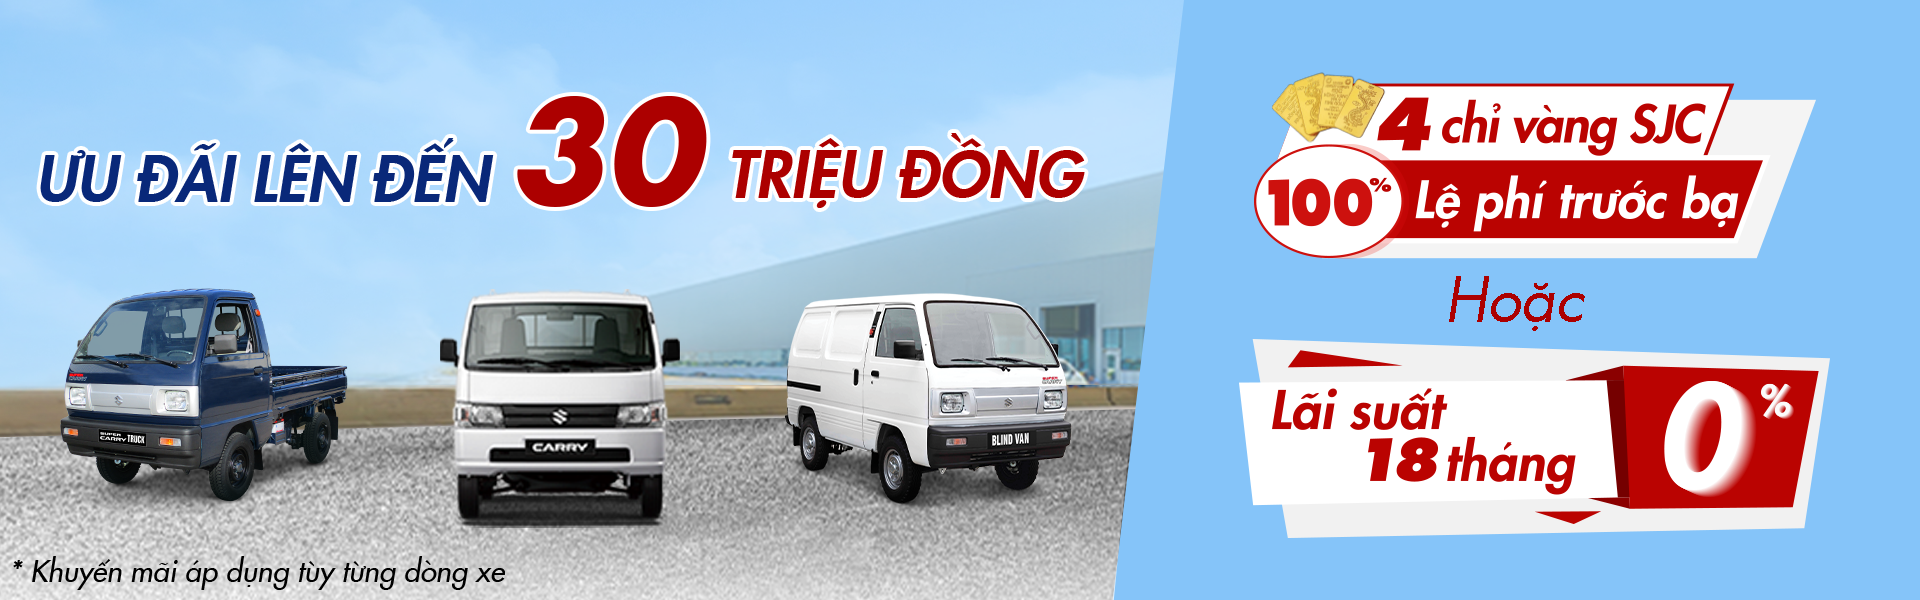 2 mẫu xe Suzuki XL7 và Suzuki Ertiga siêu tiết kiệm nhiên liệu